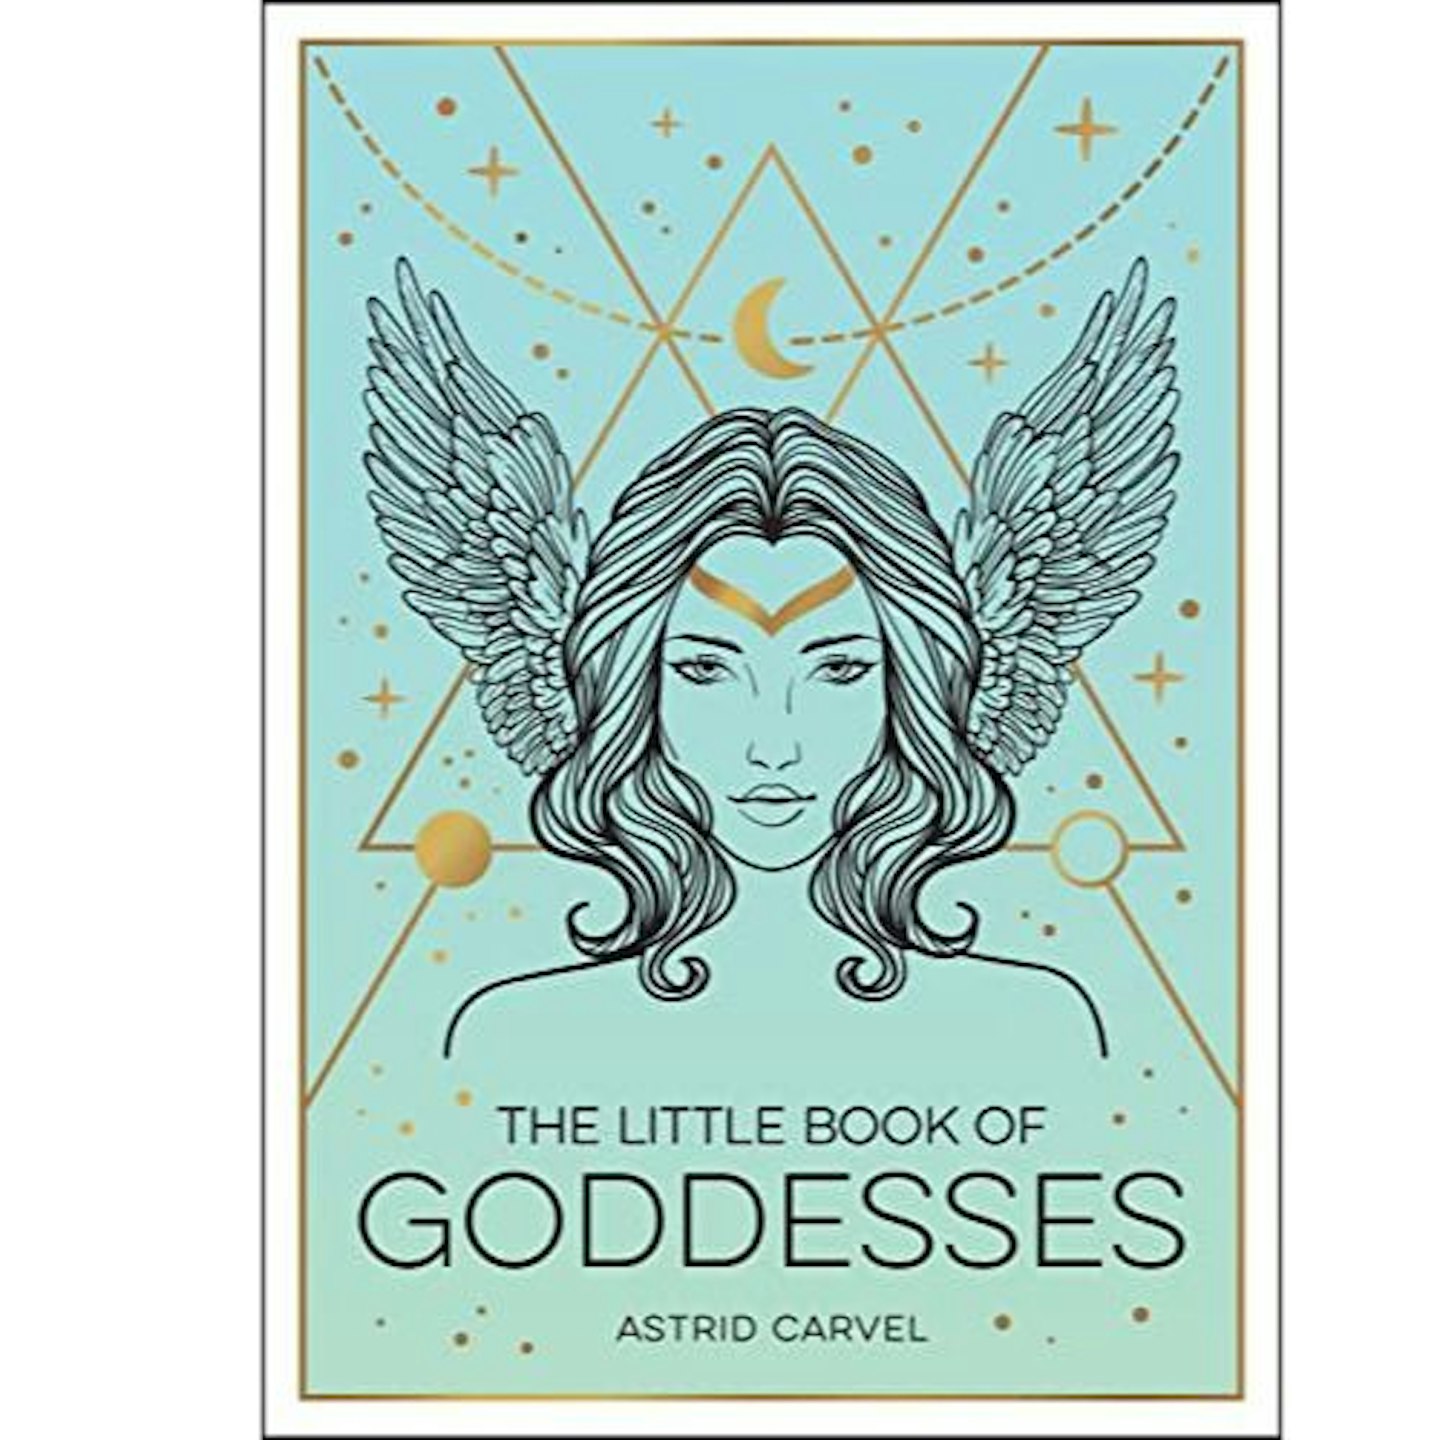 The Little Book of Goddesses